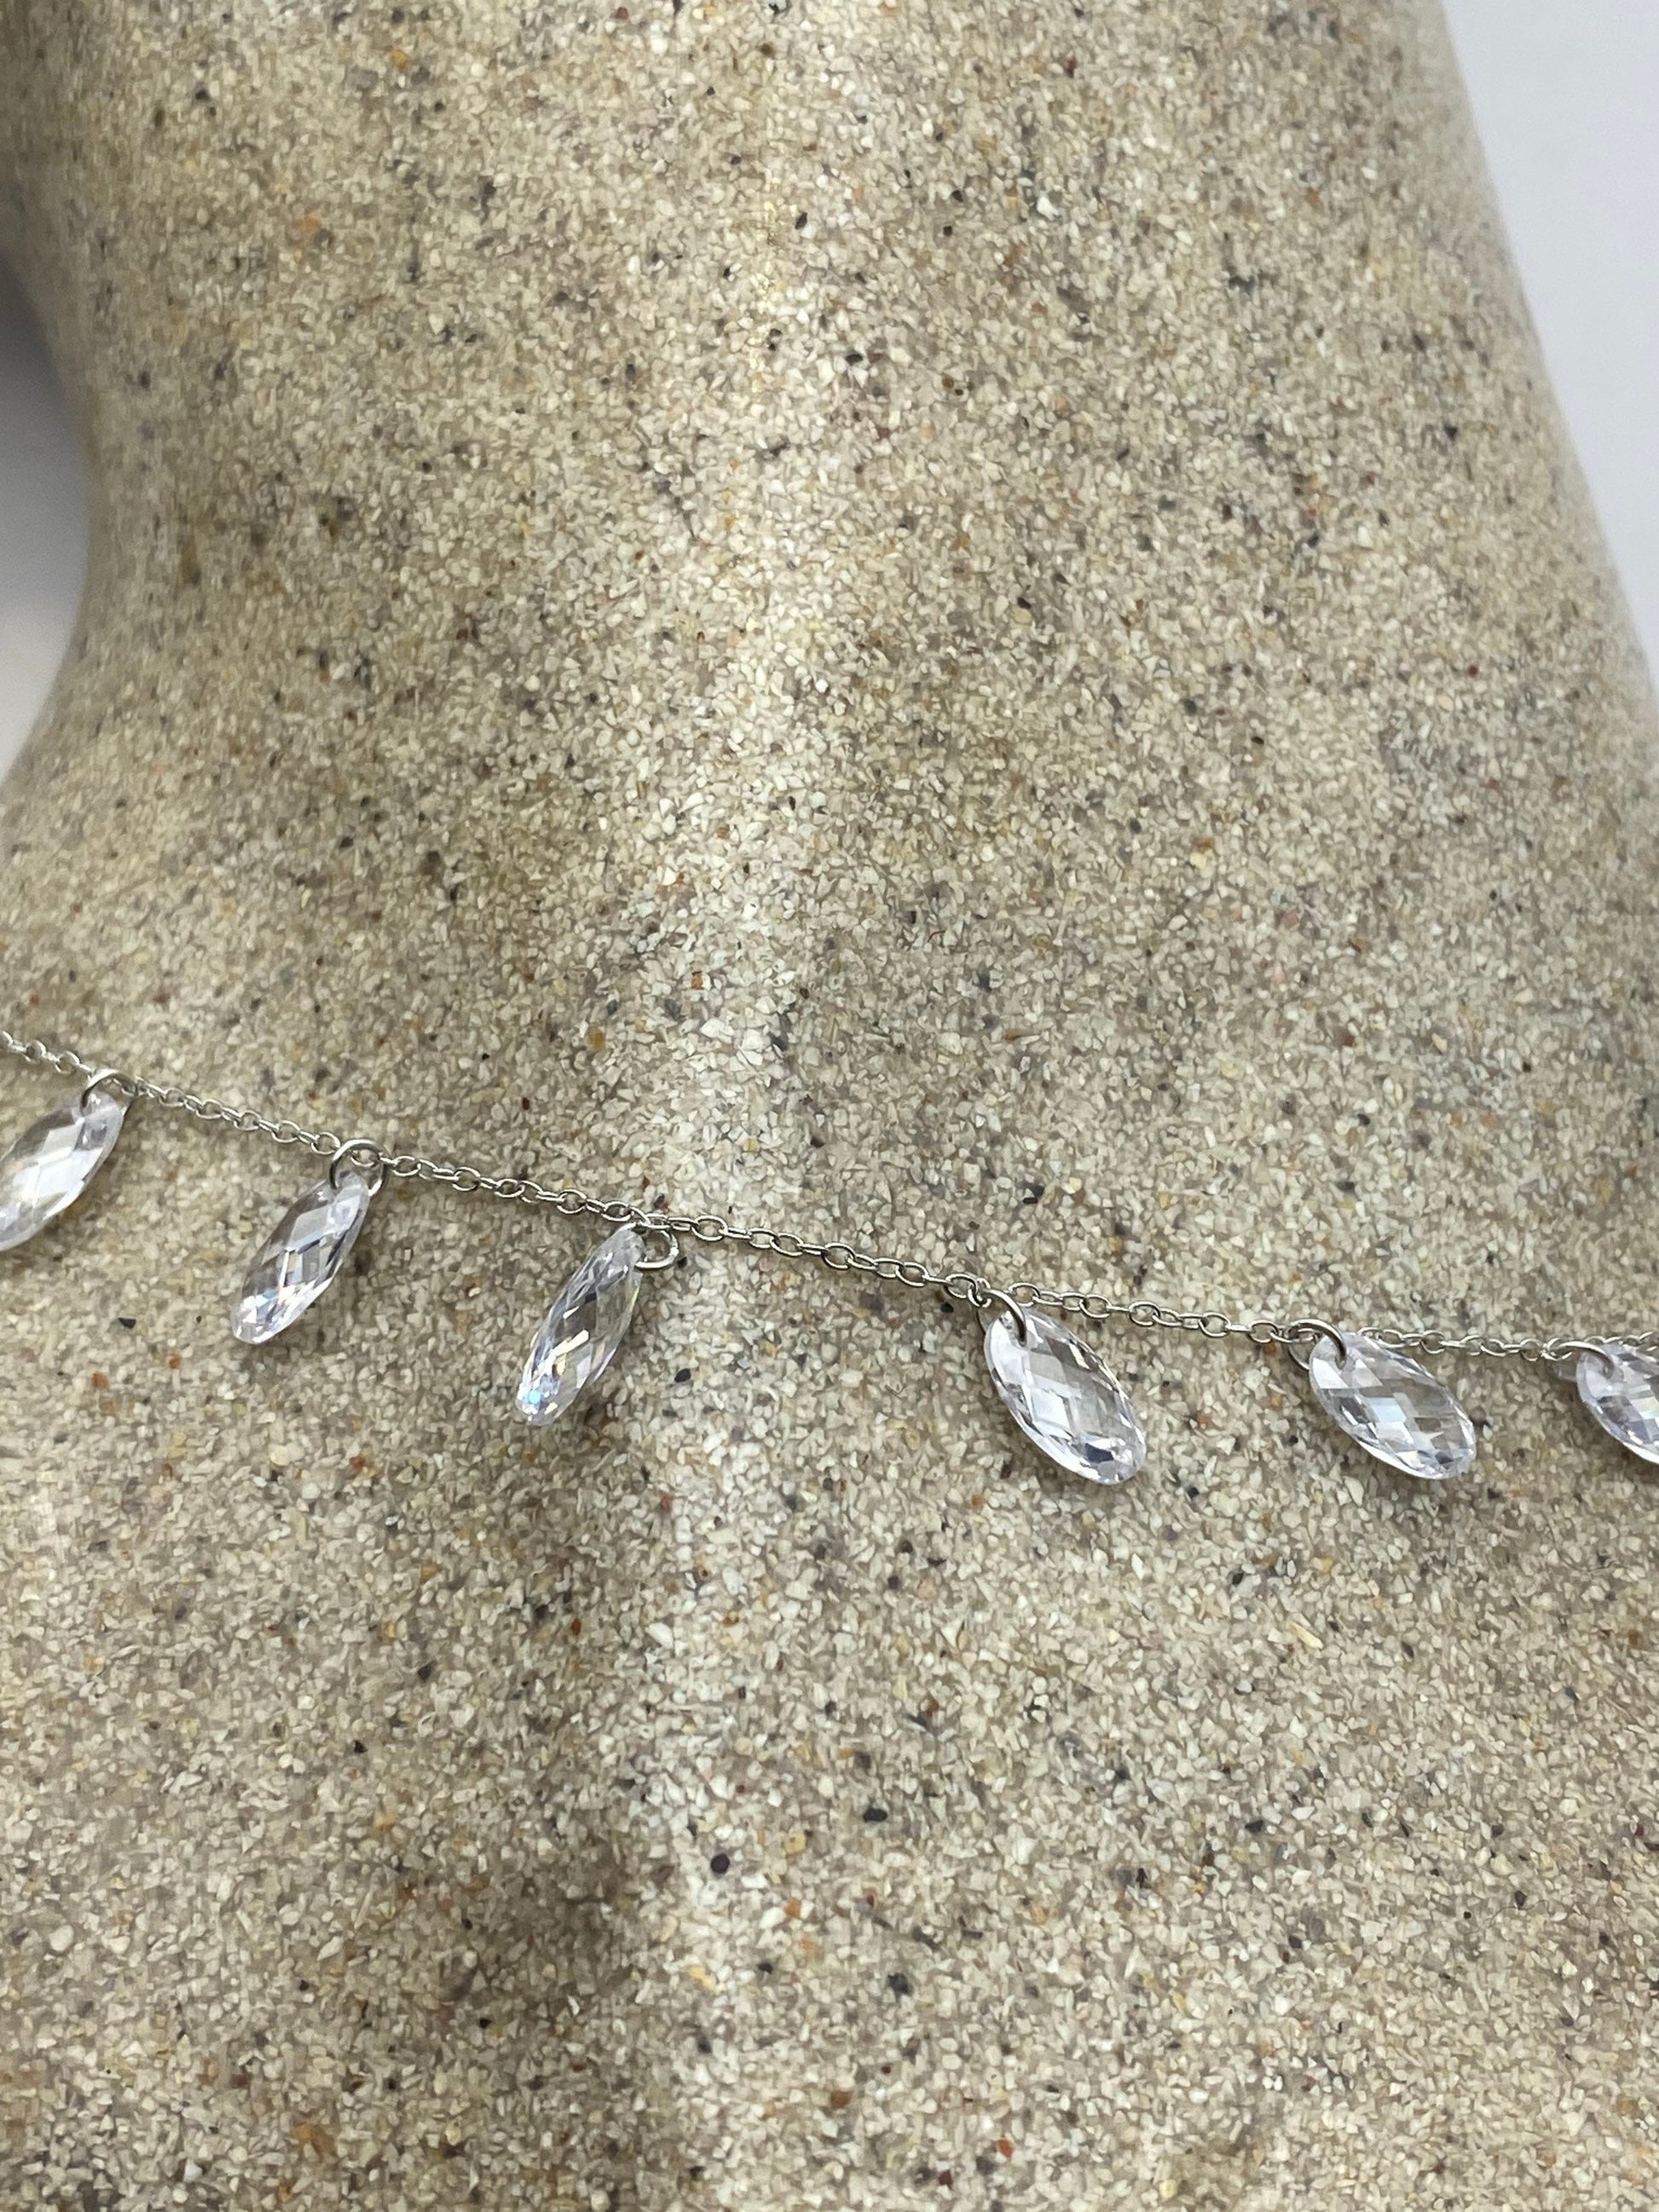 Vintage Crystal Choker Necklace 925 Sterling Silver